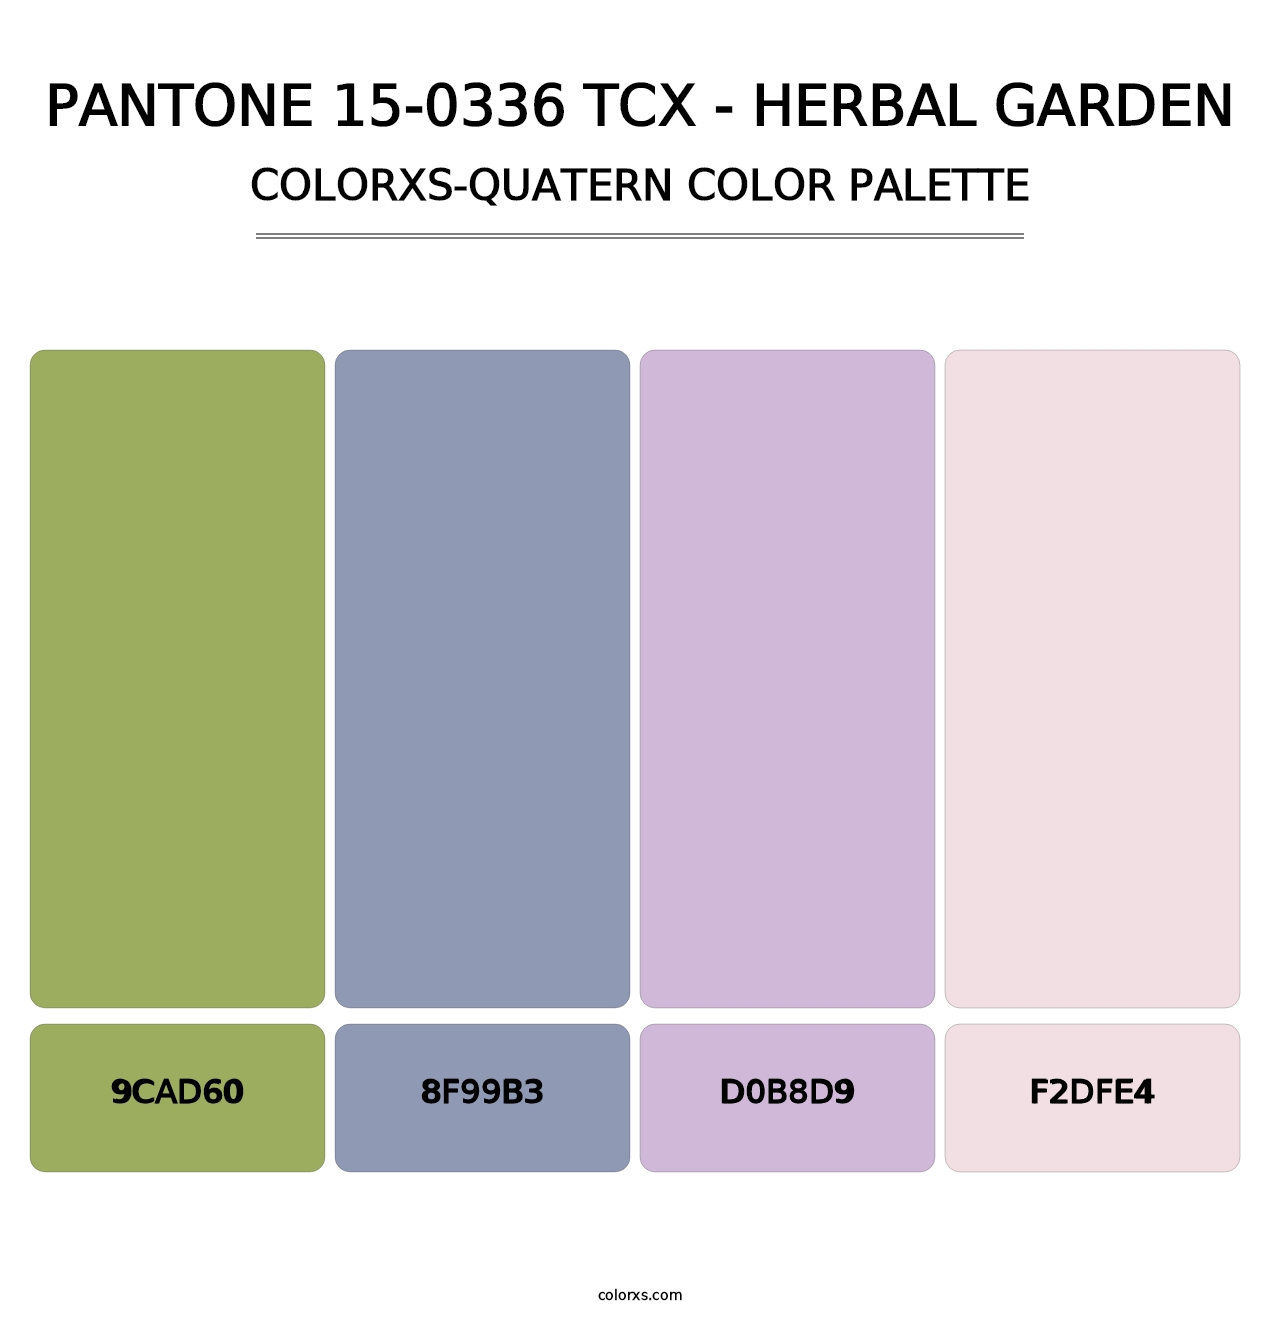 PANTONE 15-0336 TCX - Herbal Garden - Colorxs Quatern Palette